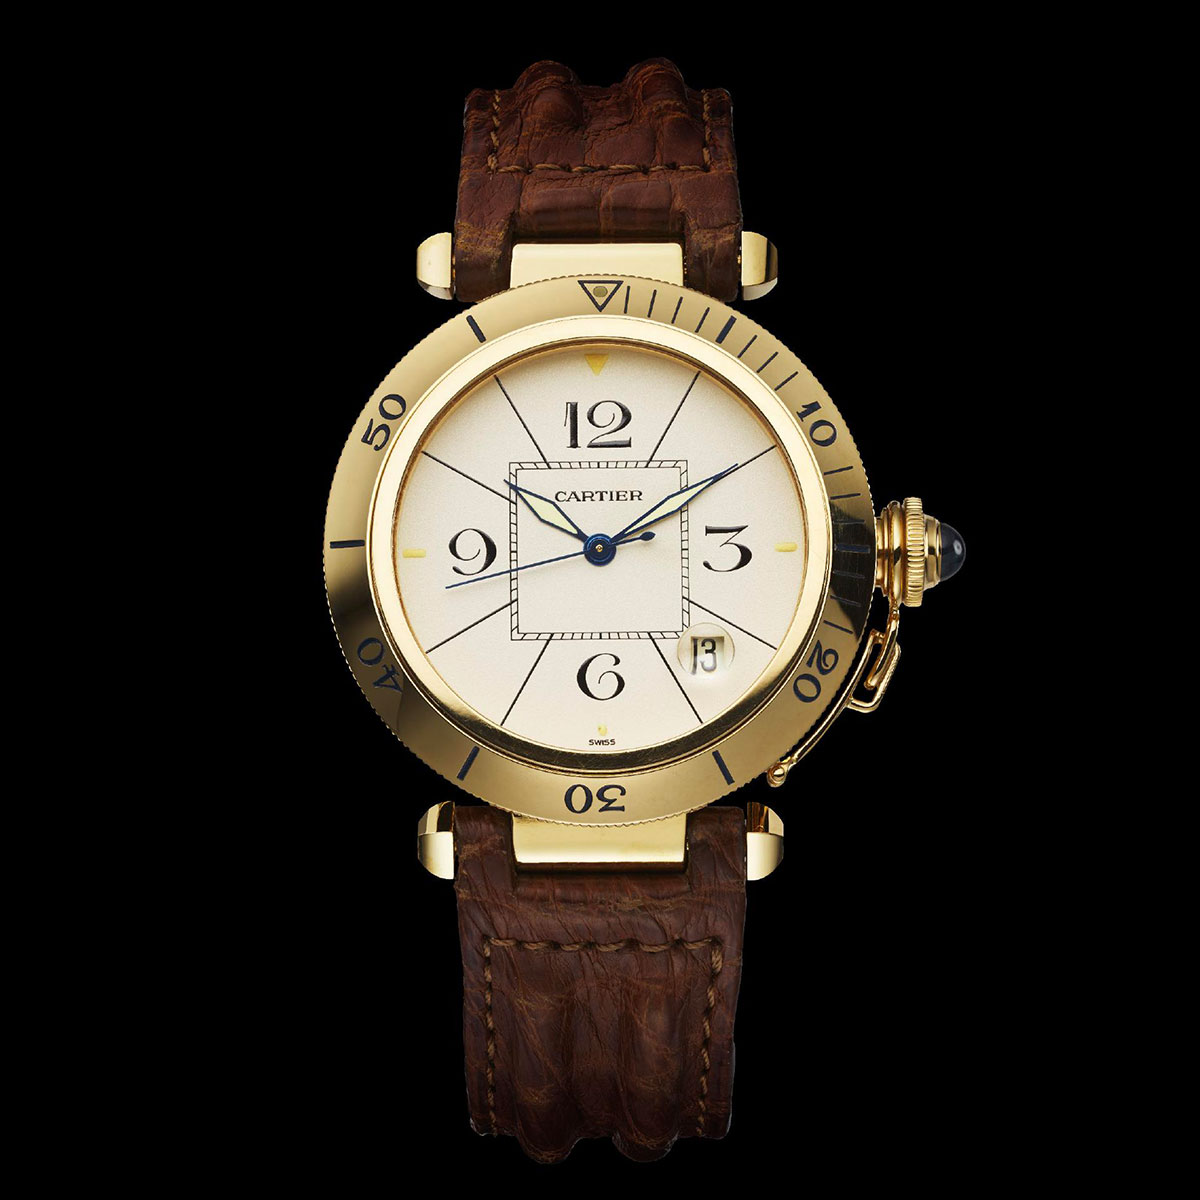 Cartier-Pasha-historical-watch.jpg